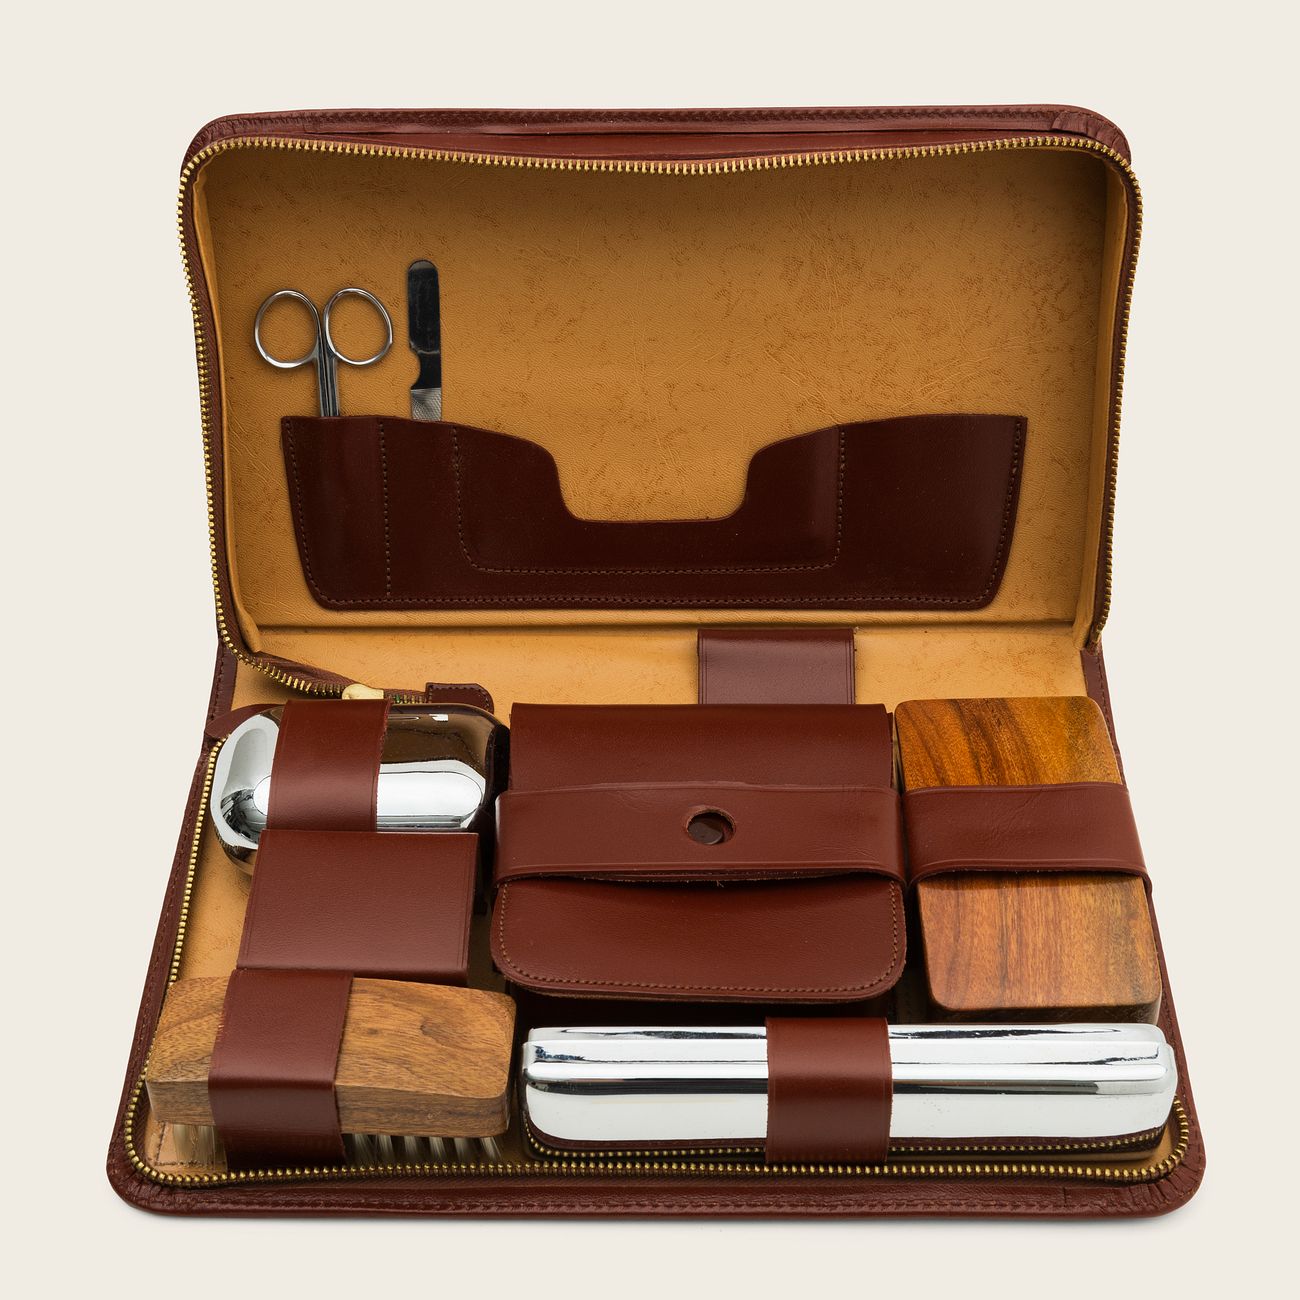 Download Travel kit in a brown leather bag mockup design resource ...